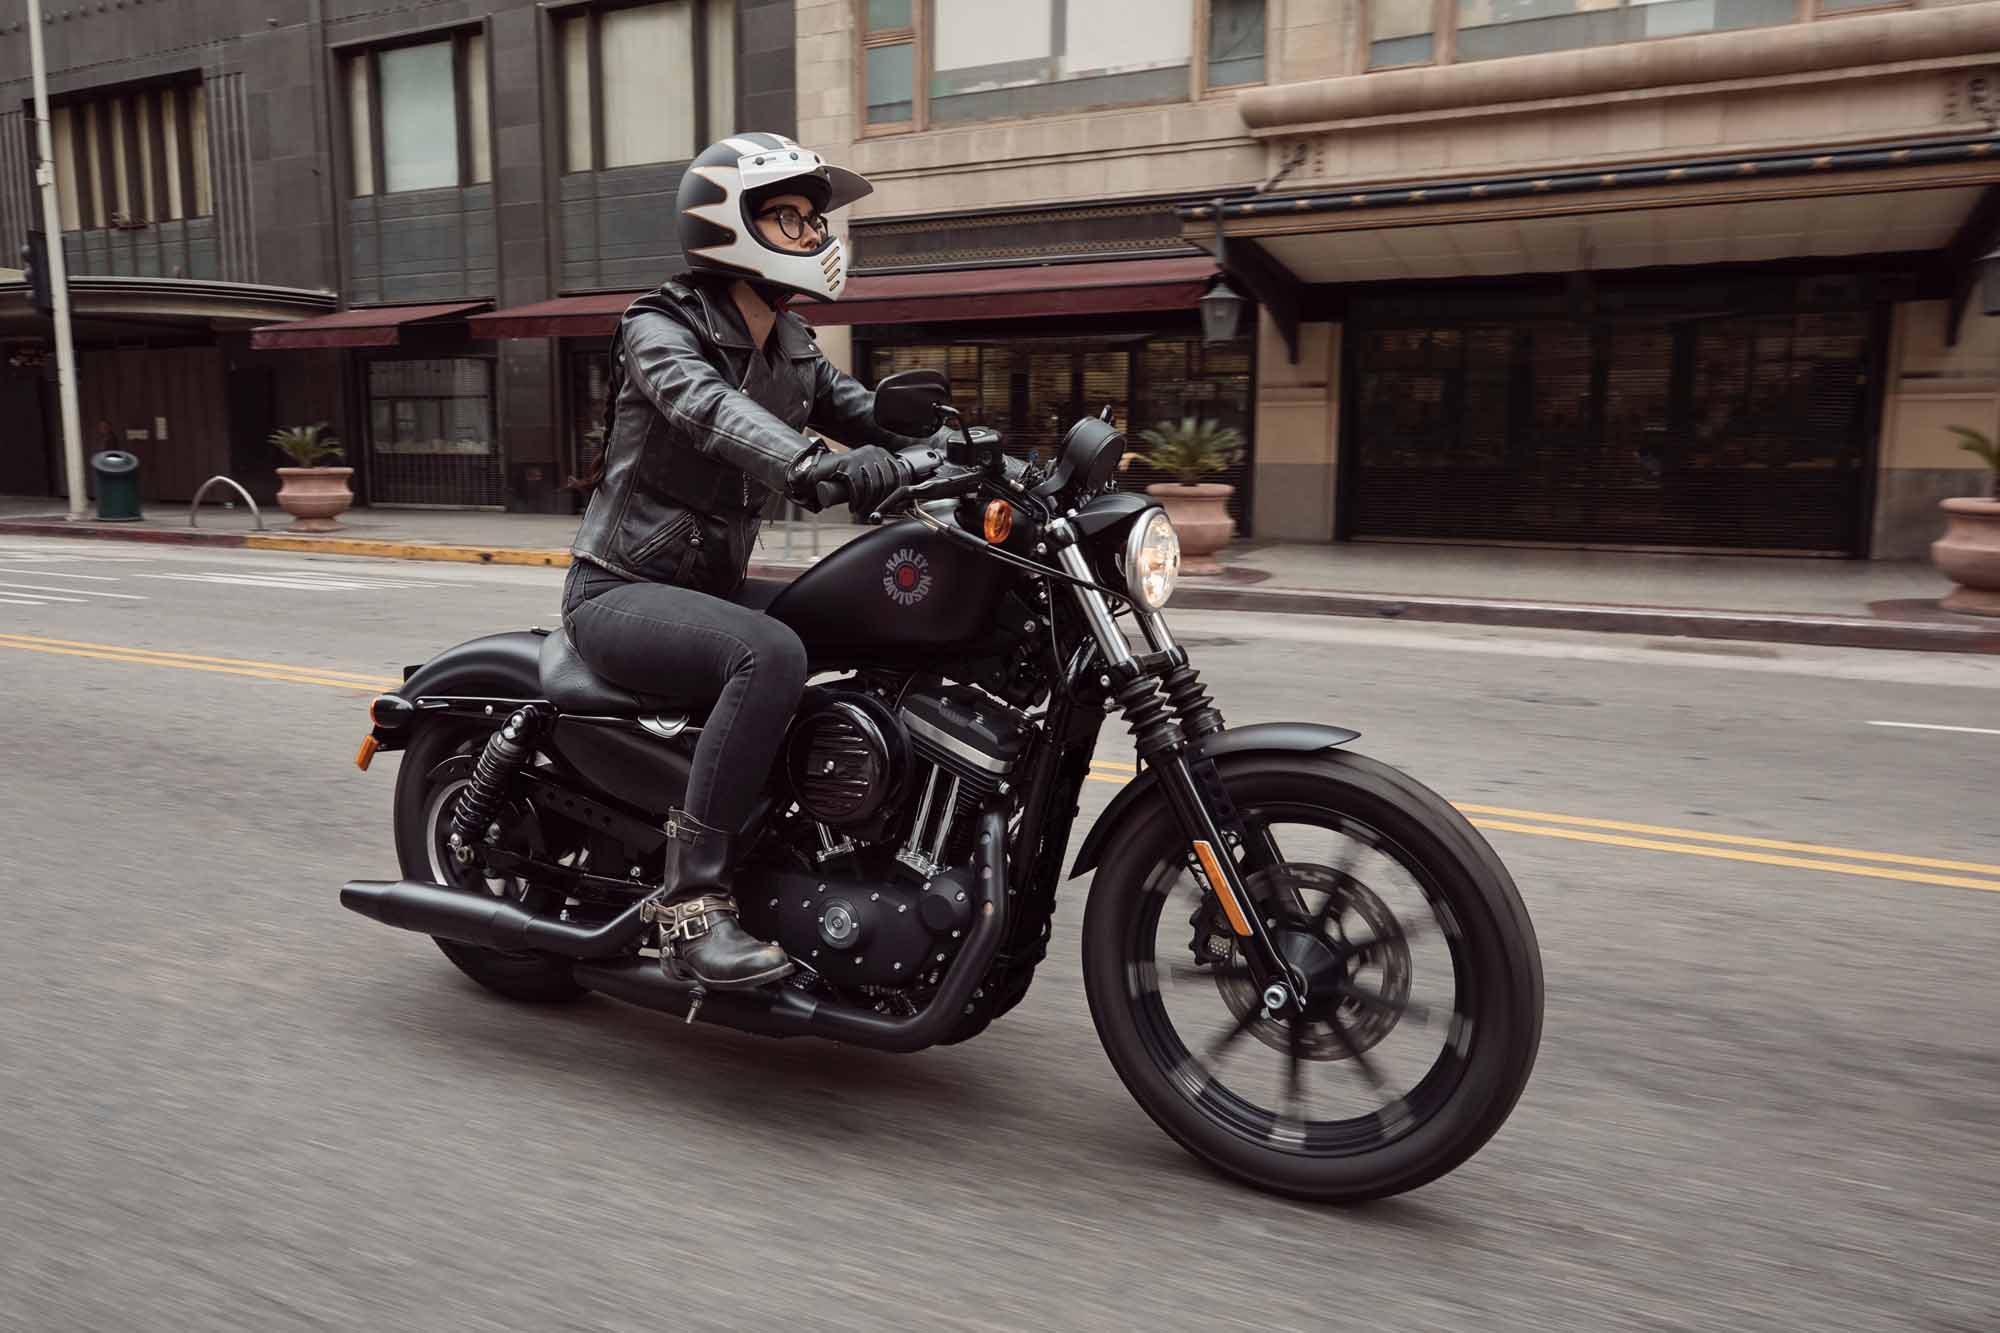 Harley-Davidson - recall because of sticker -  - Motorcycle -Magazine